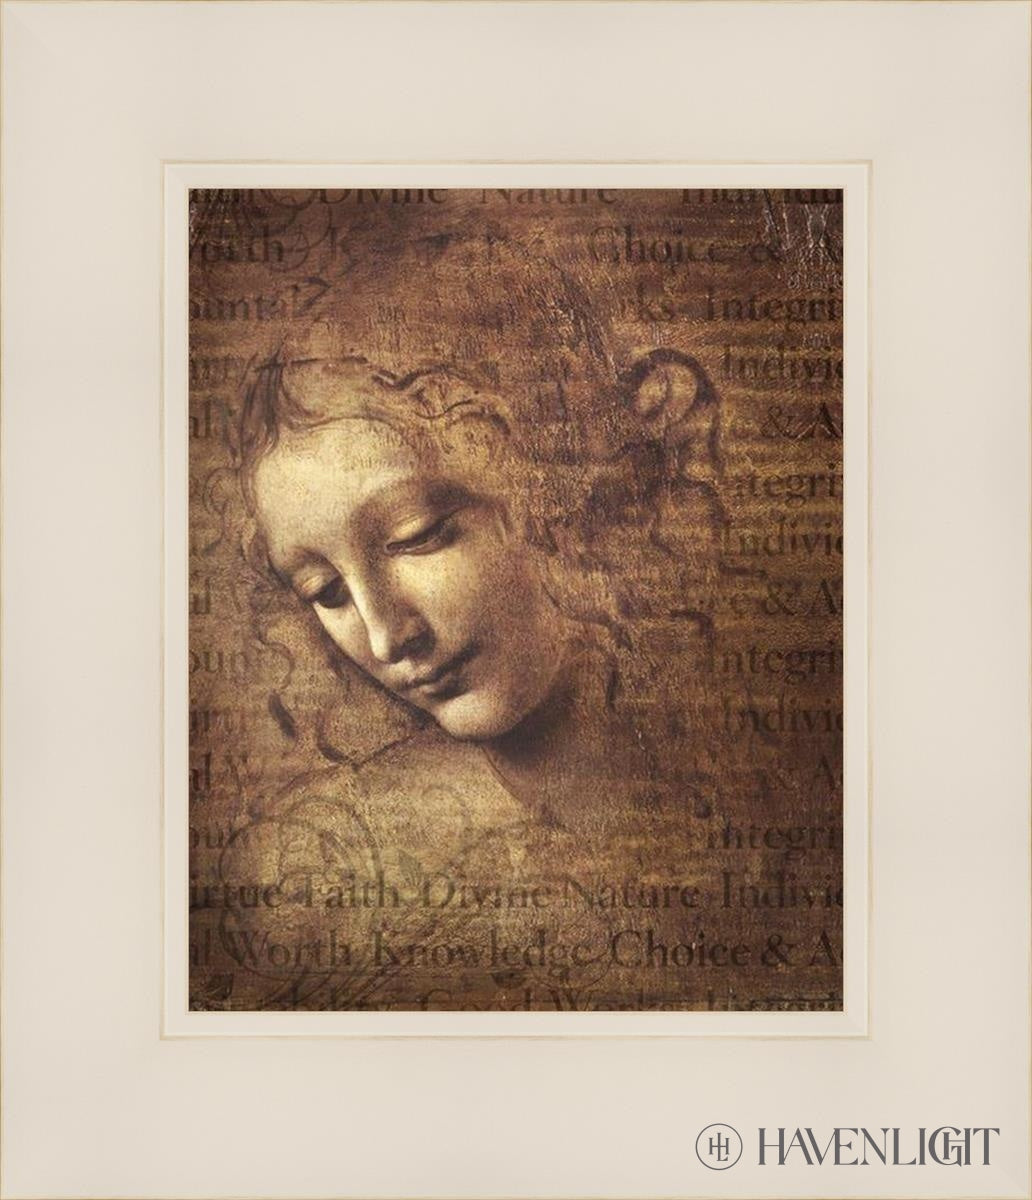 The Last Supper by Leonardo Da Vinci Open Edition Print / 24 x 8 / Print Only